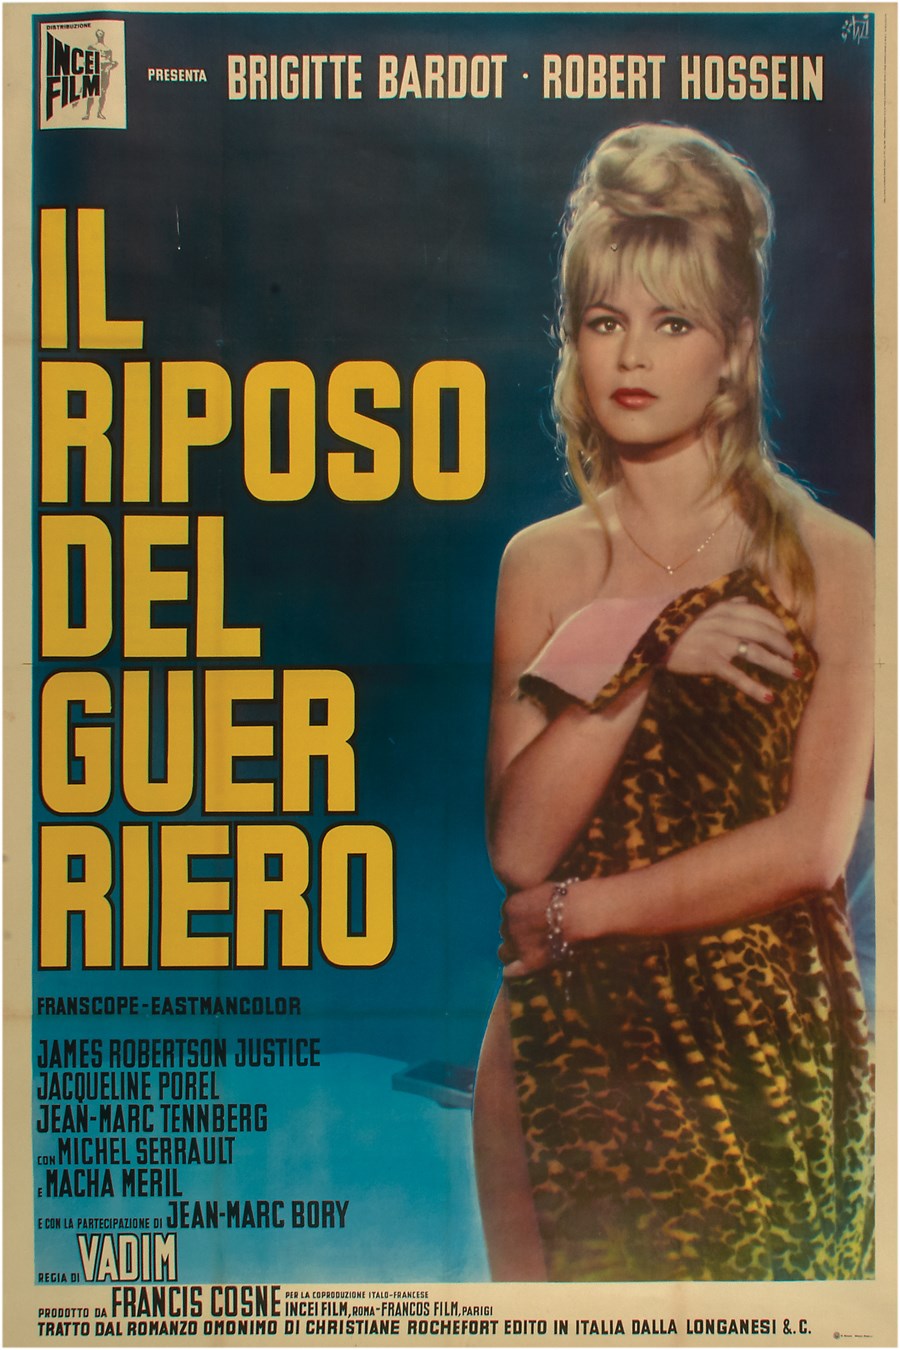 - HUGE 1962 Brigitte Bardot Original Italian Release Film Poster (80x58")